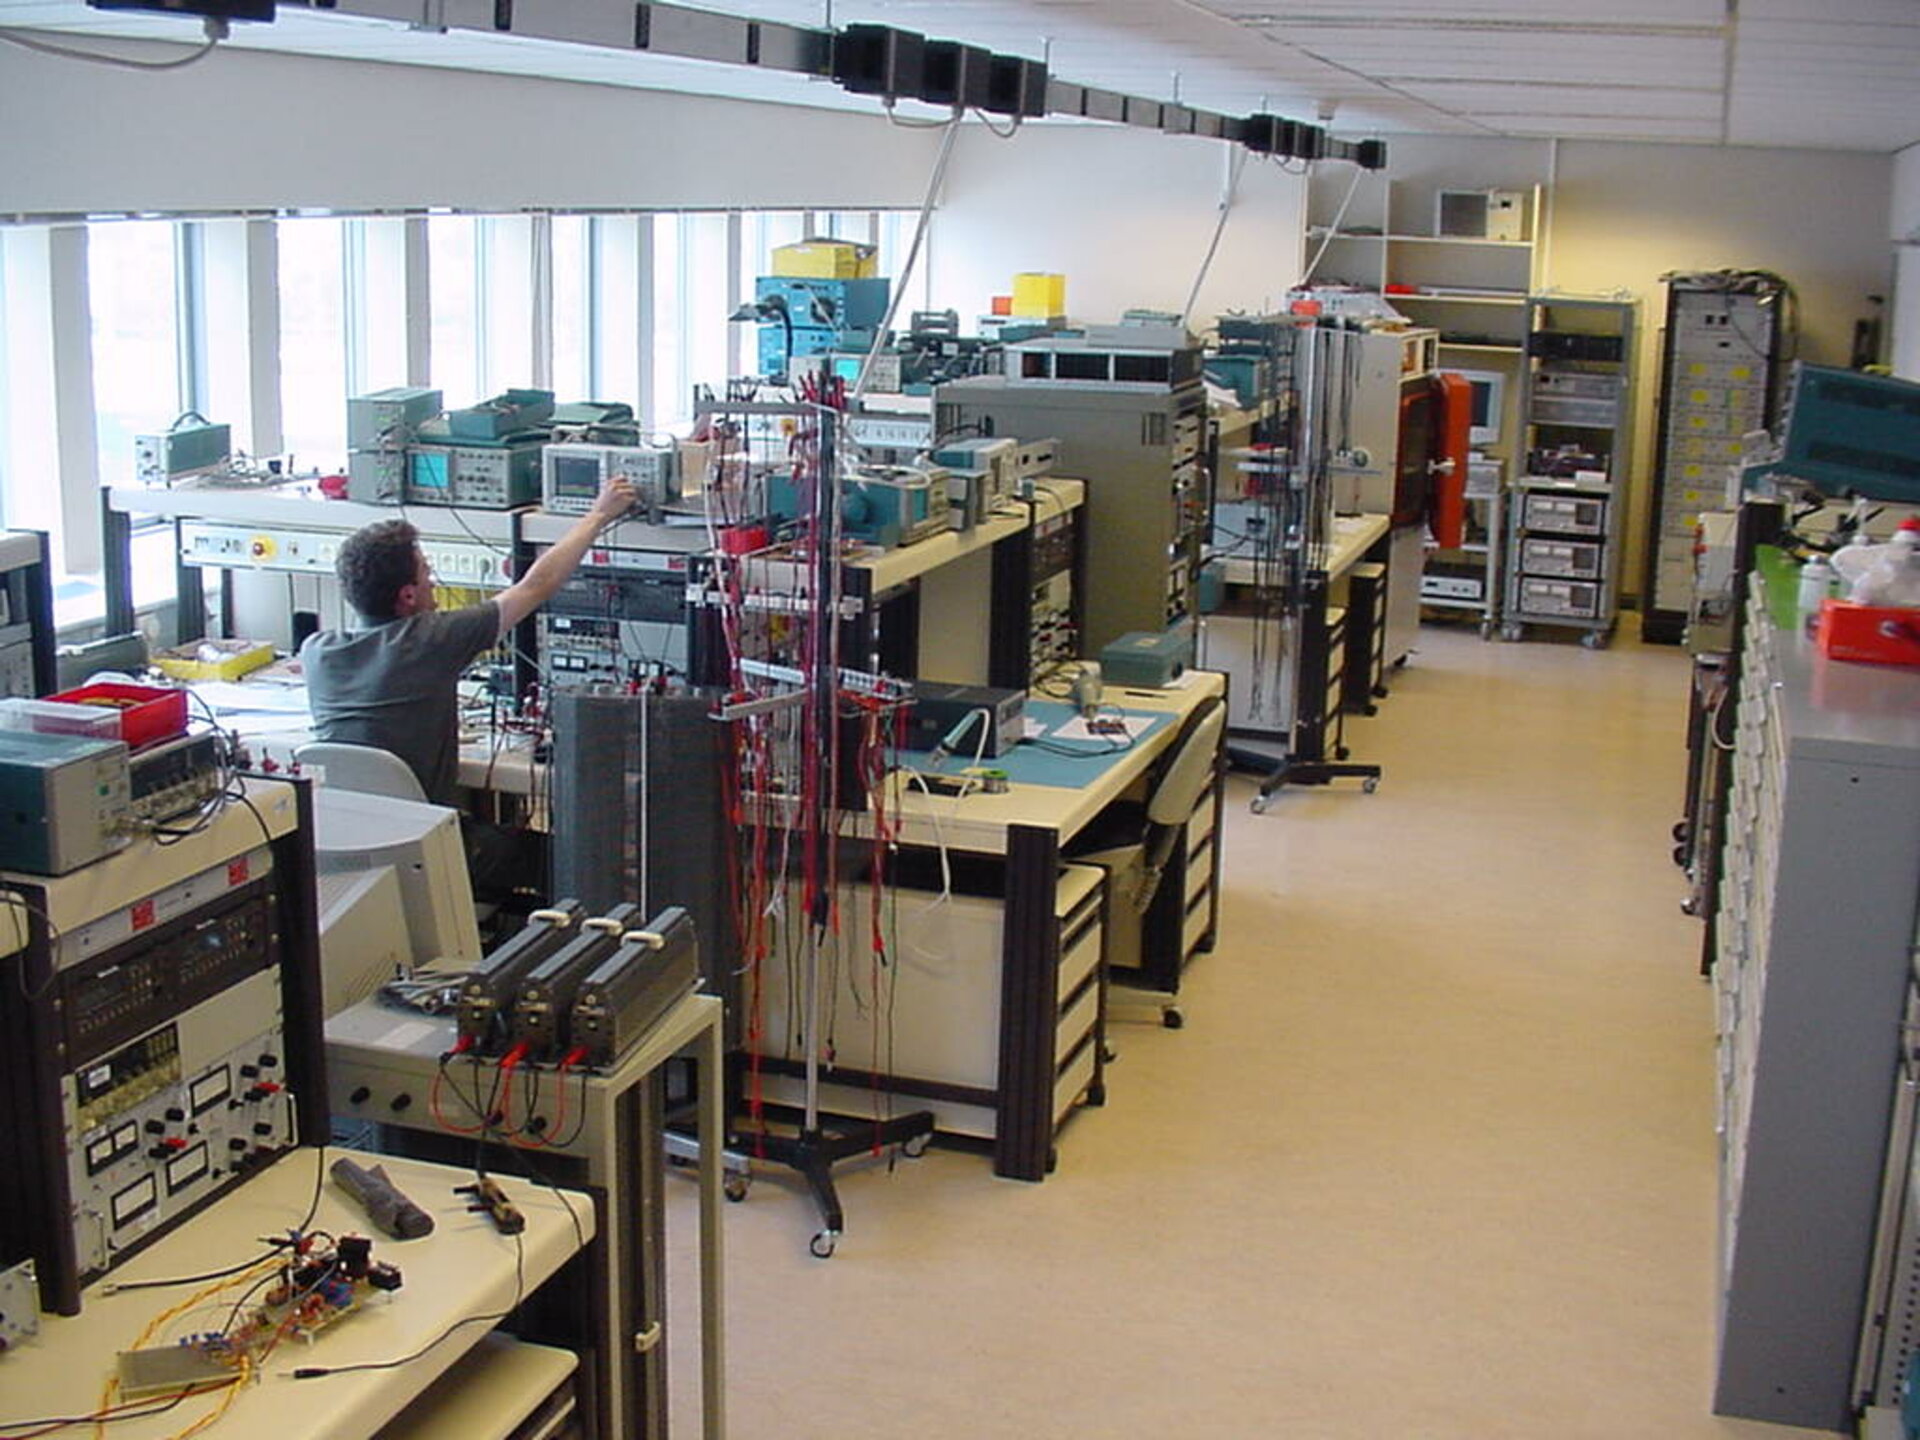 Power electronics laboratory workspaces